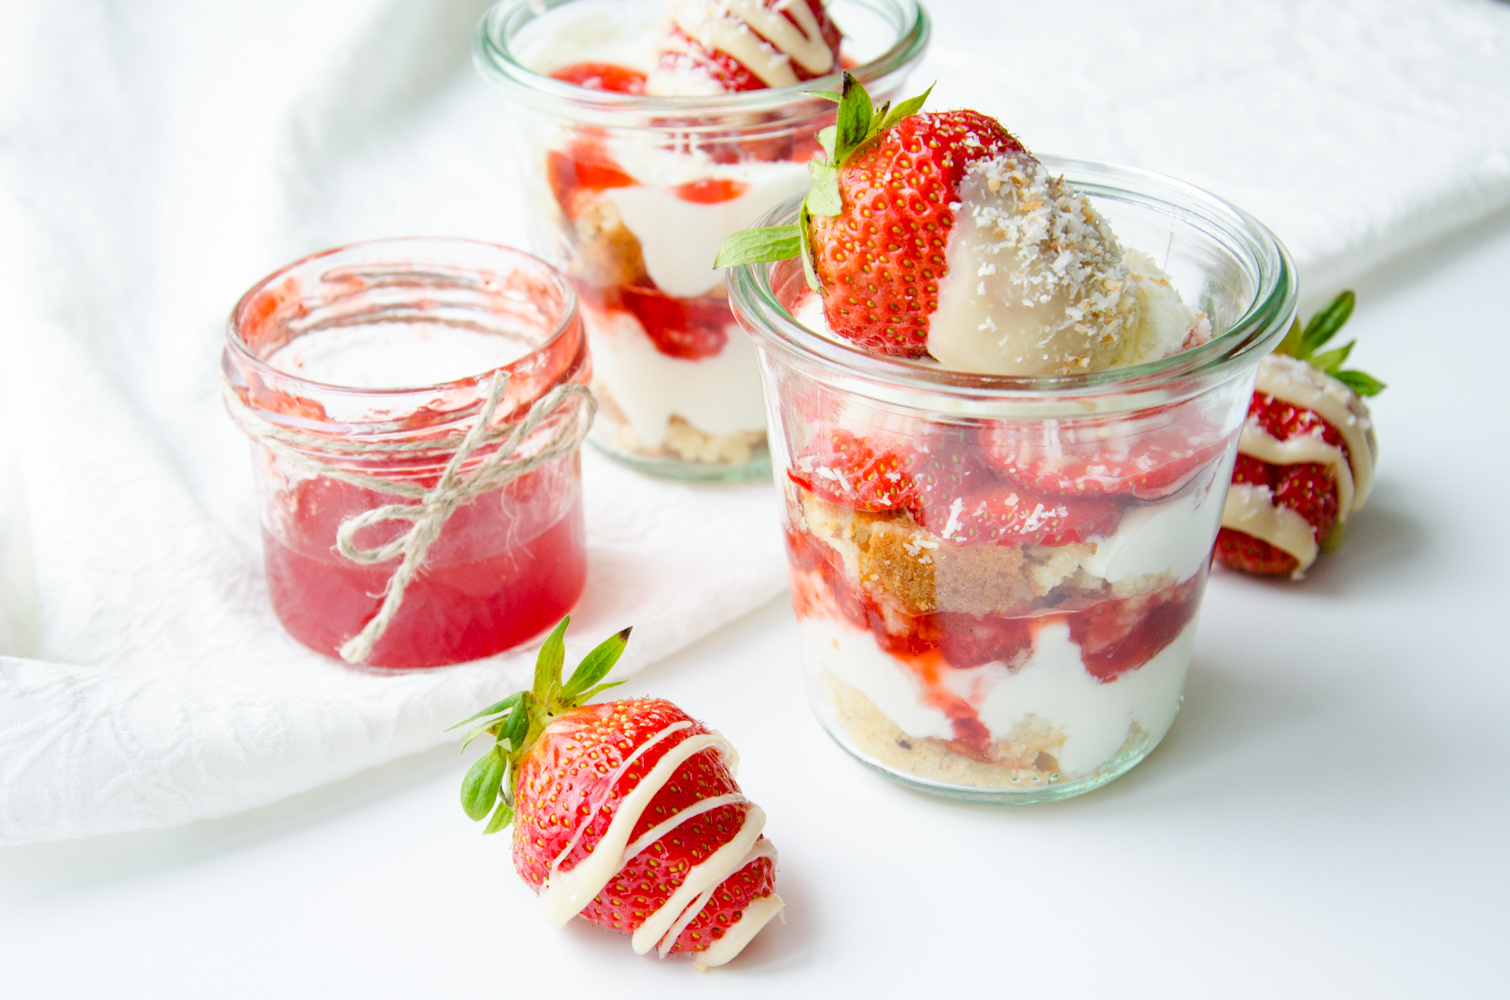 Erdbeer-Kokos-Dessert - Baking Barbarine